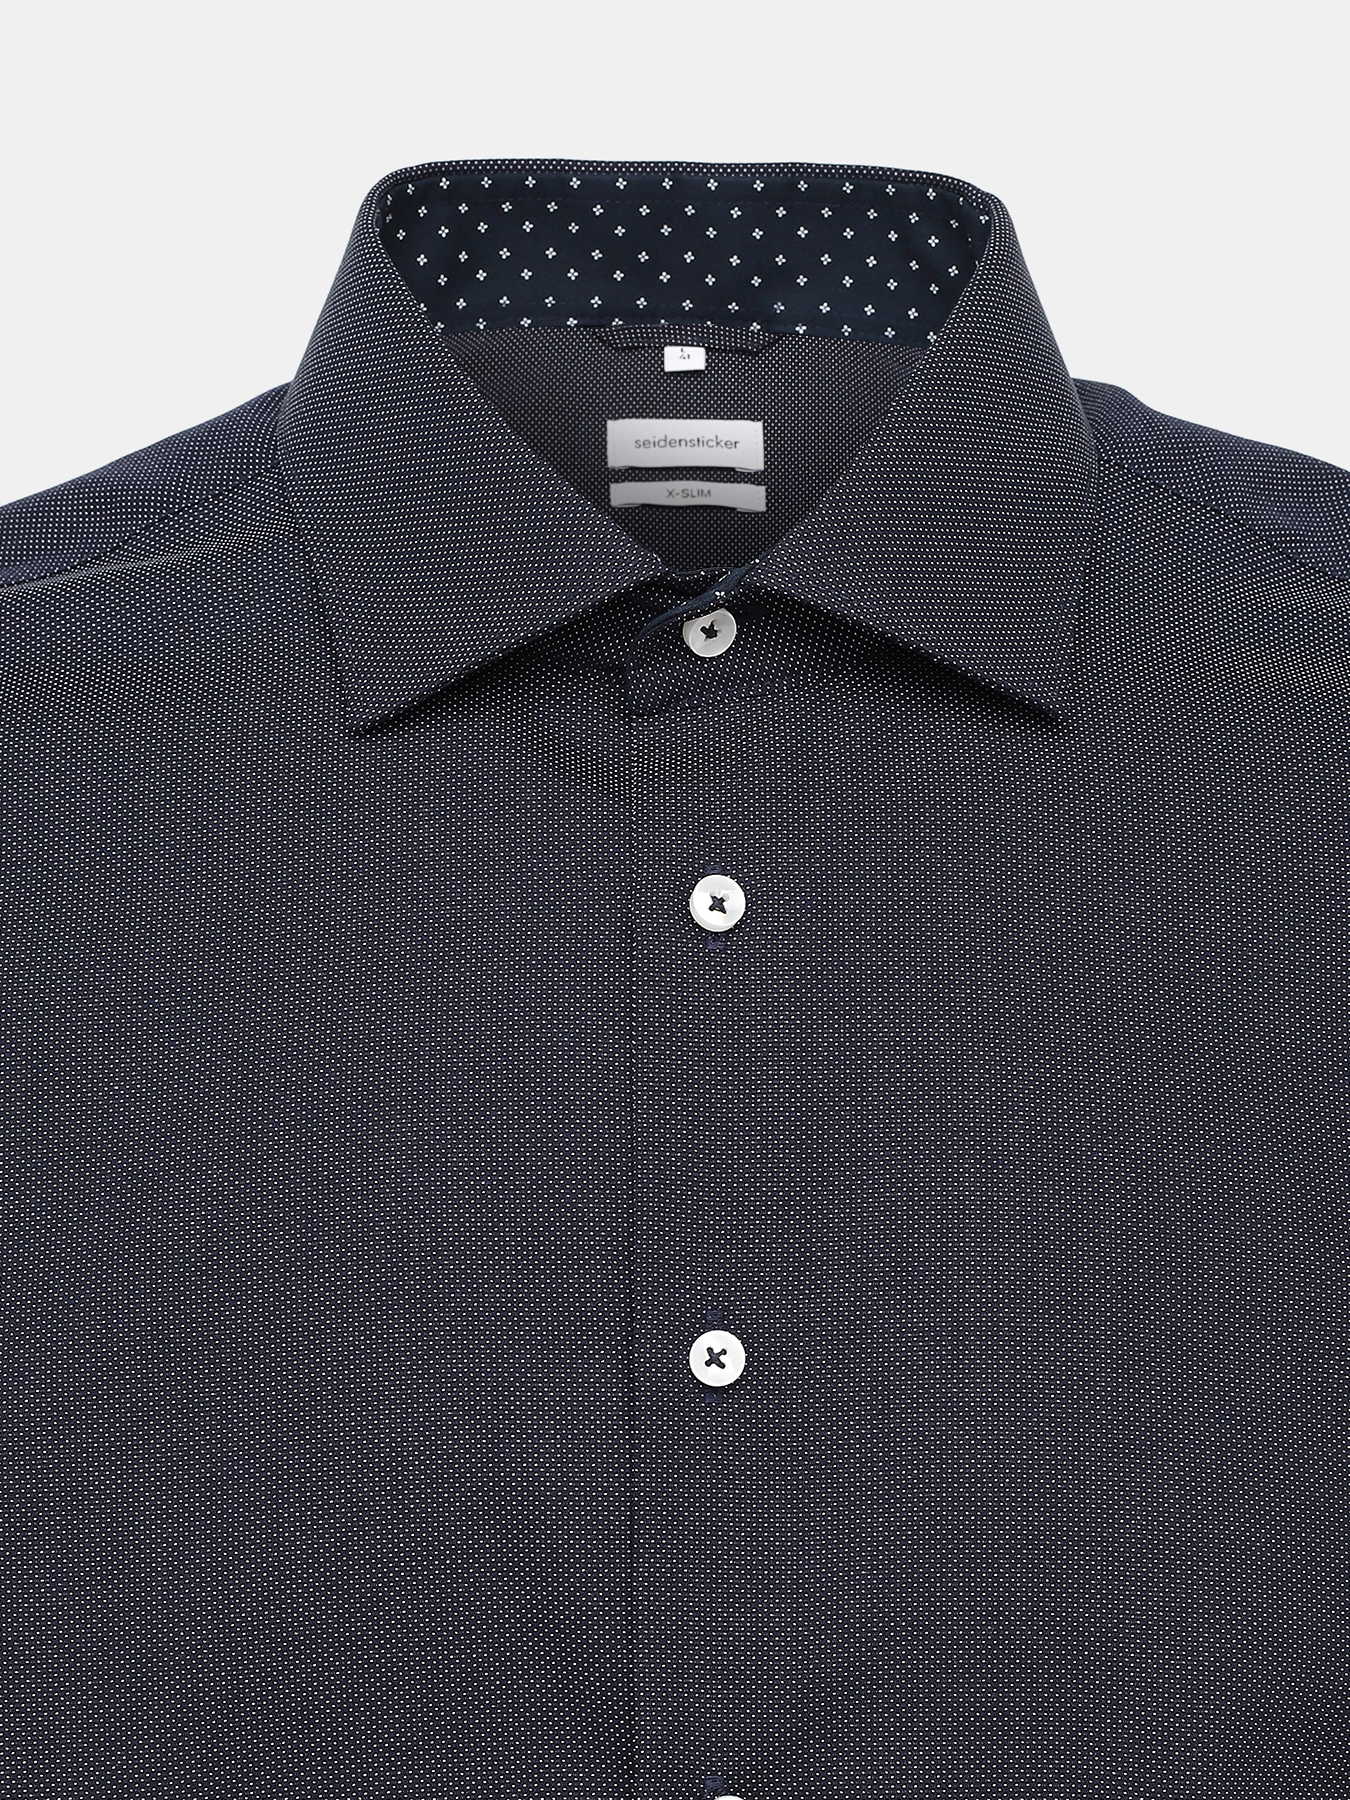 Рубашка Seidensticker 434015-022, цвет темно-синий, размер 54 - фото 2